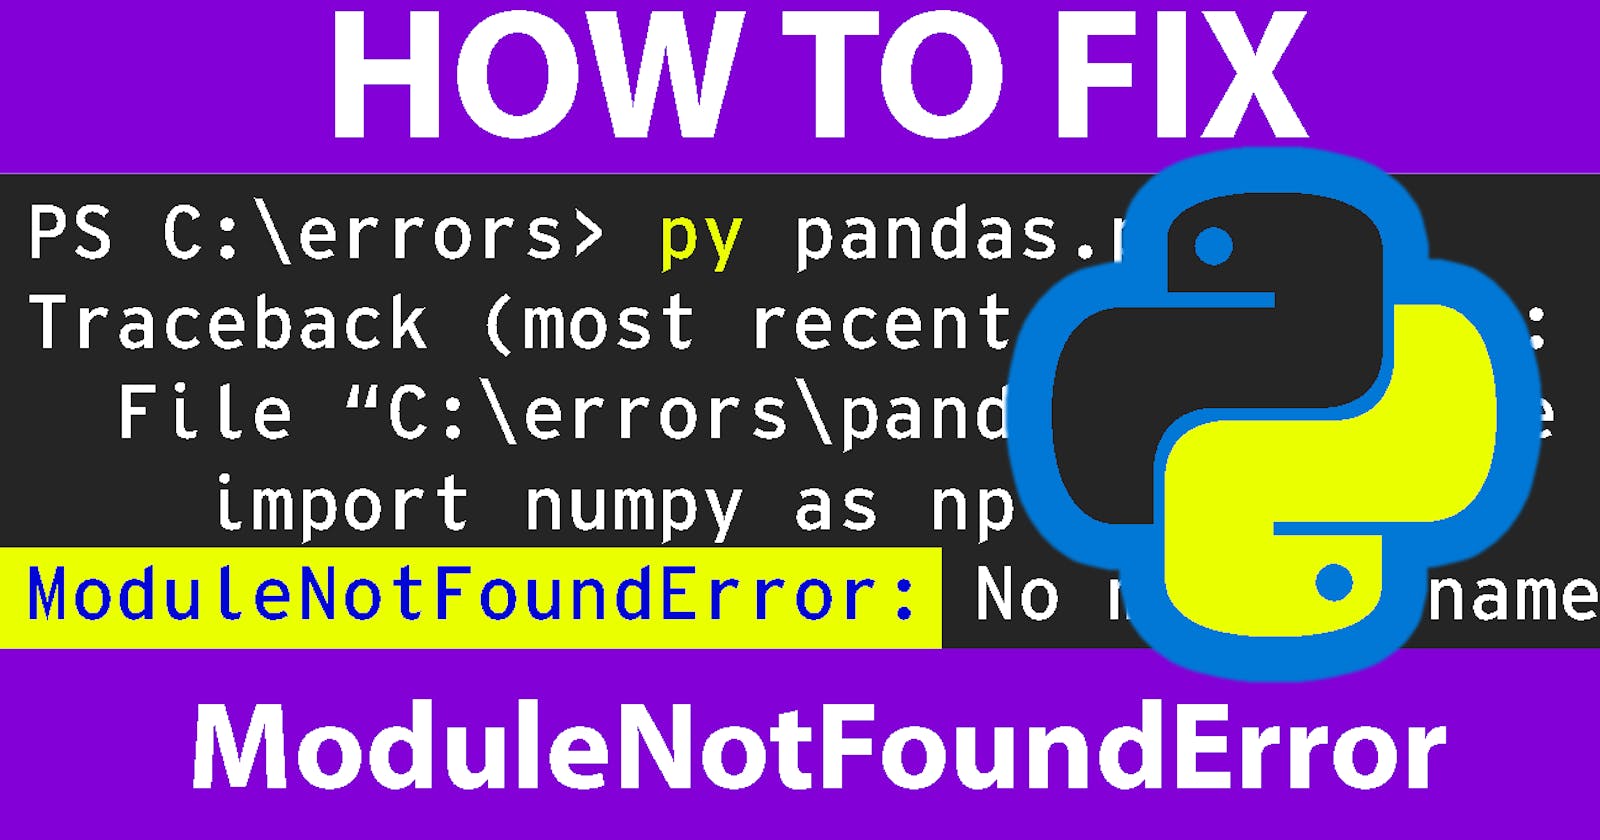 How to Fix ModuleNotFoundError